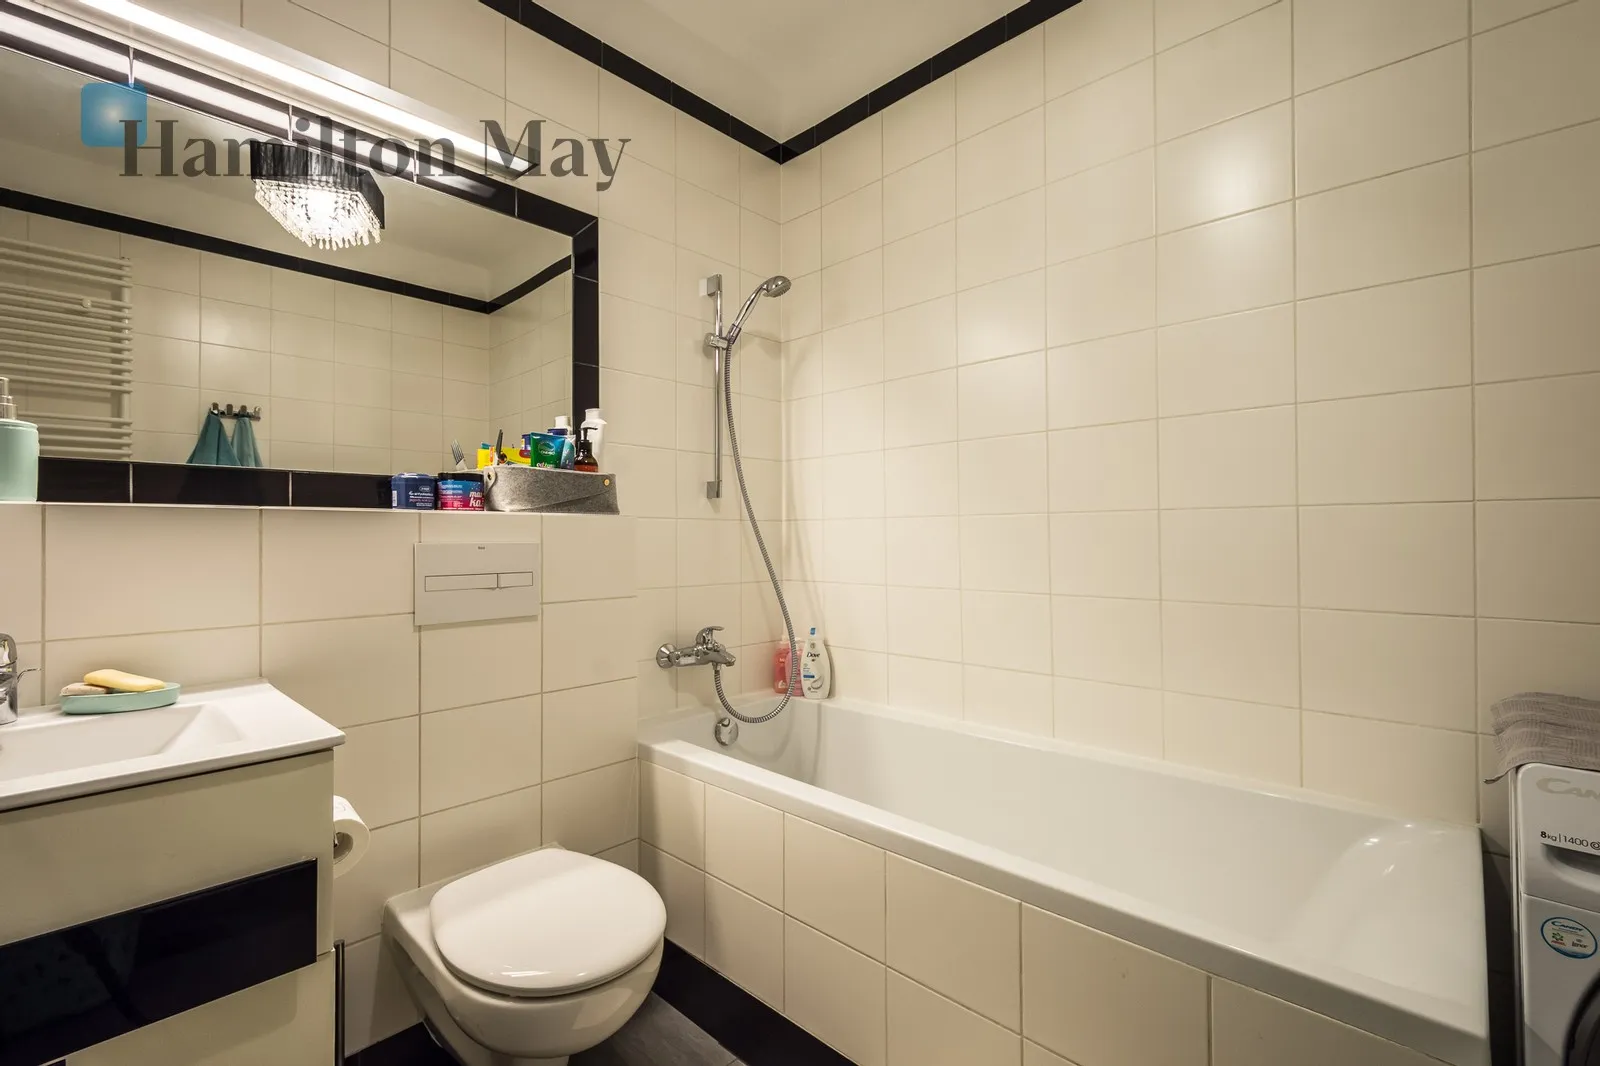 Level: 1 Price: 1300000 PLN Bedrooms: 1 Bathrooms: 1 Size: 55m2